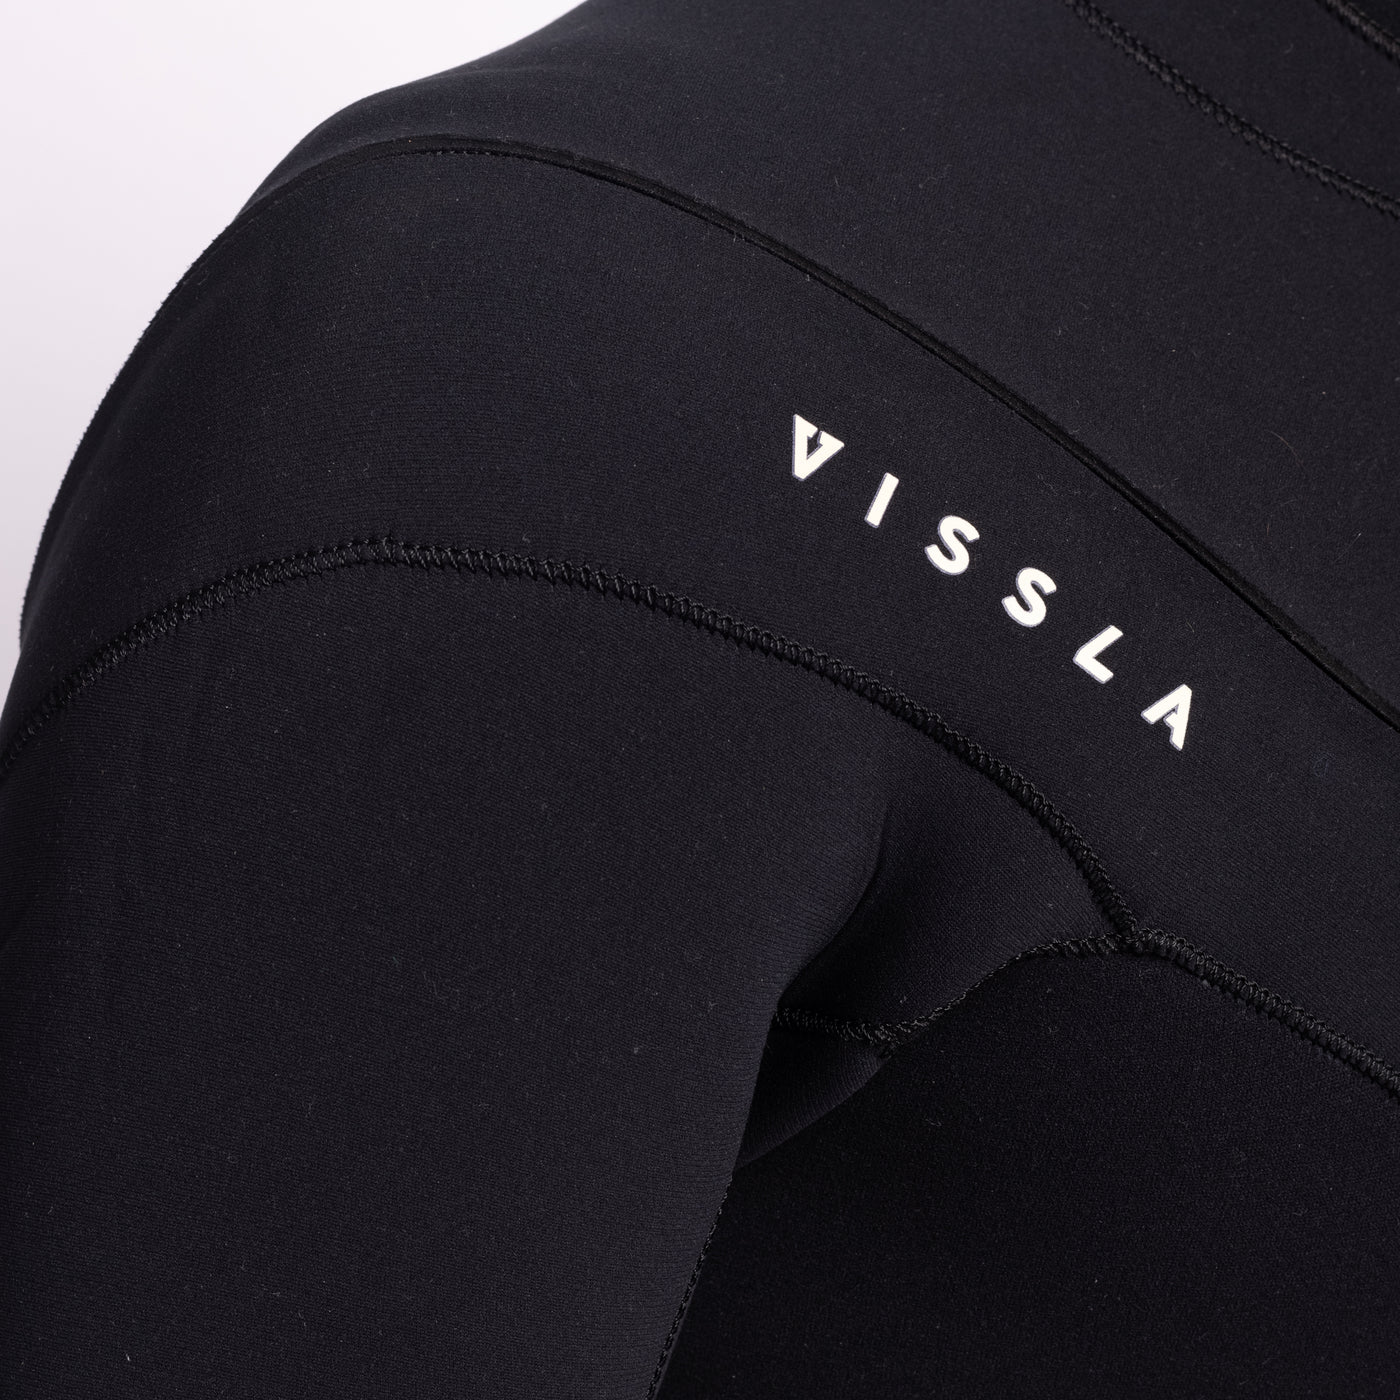 Vissla X Axxe 3-3 wetsuit logo detail